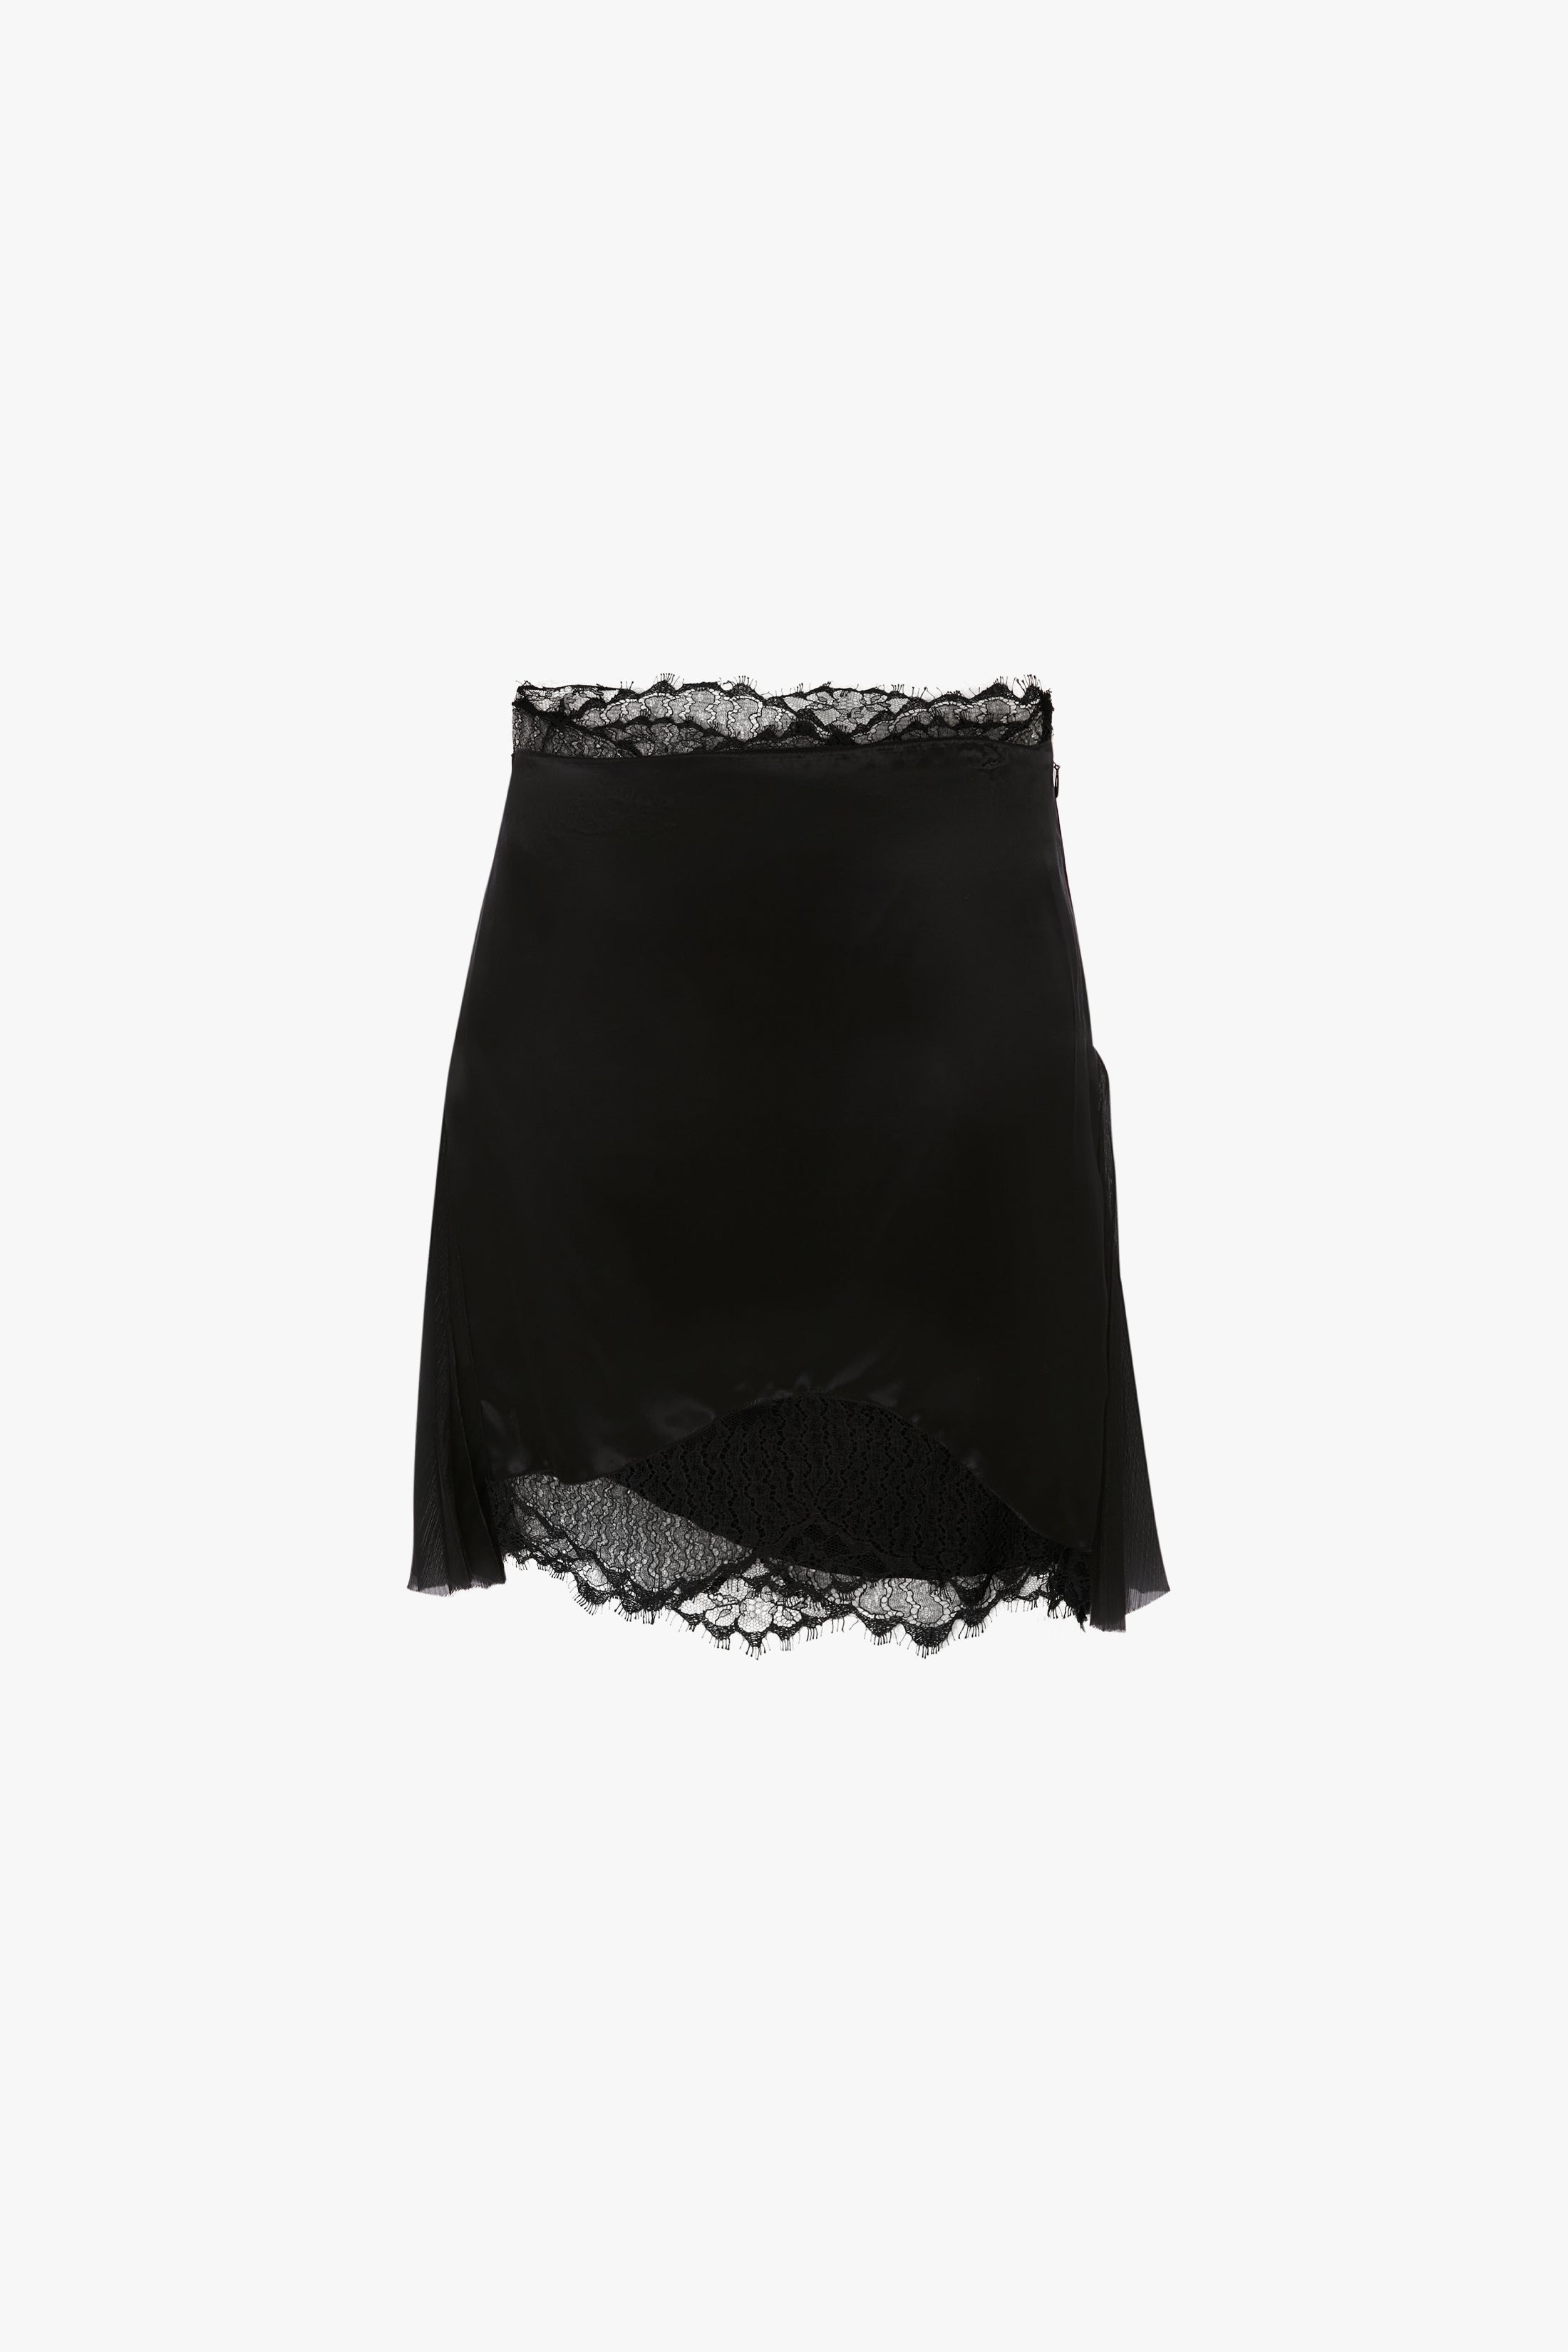 Lace Detail Mini Skirt in Black - 1